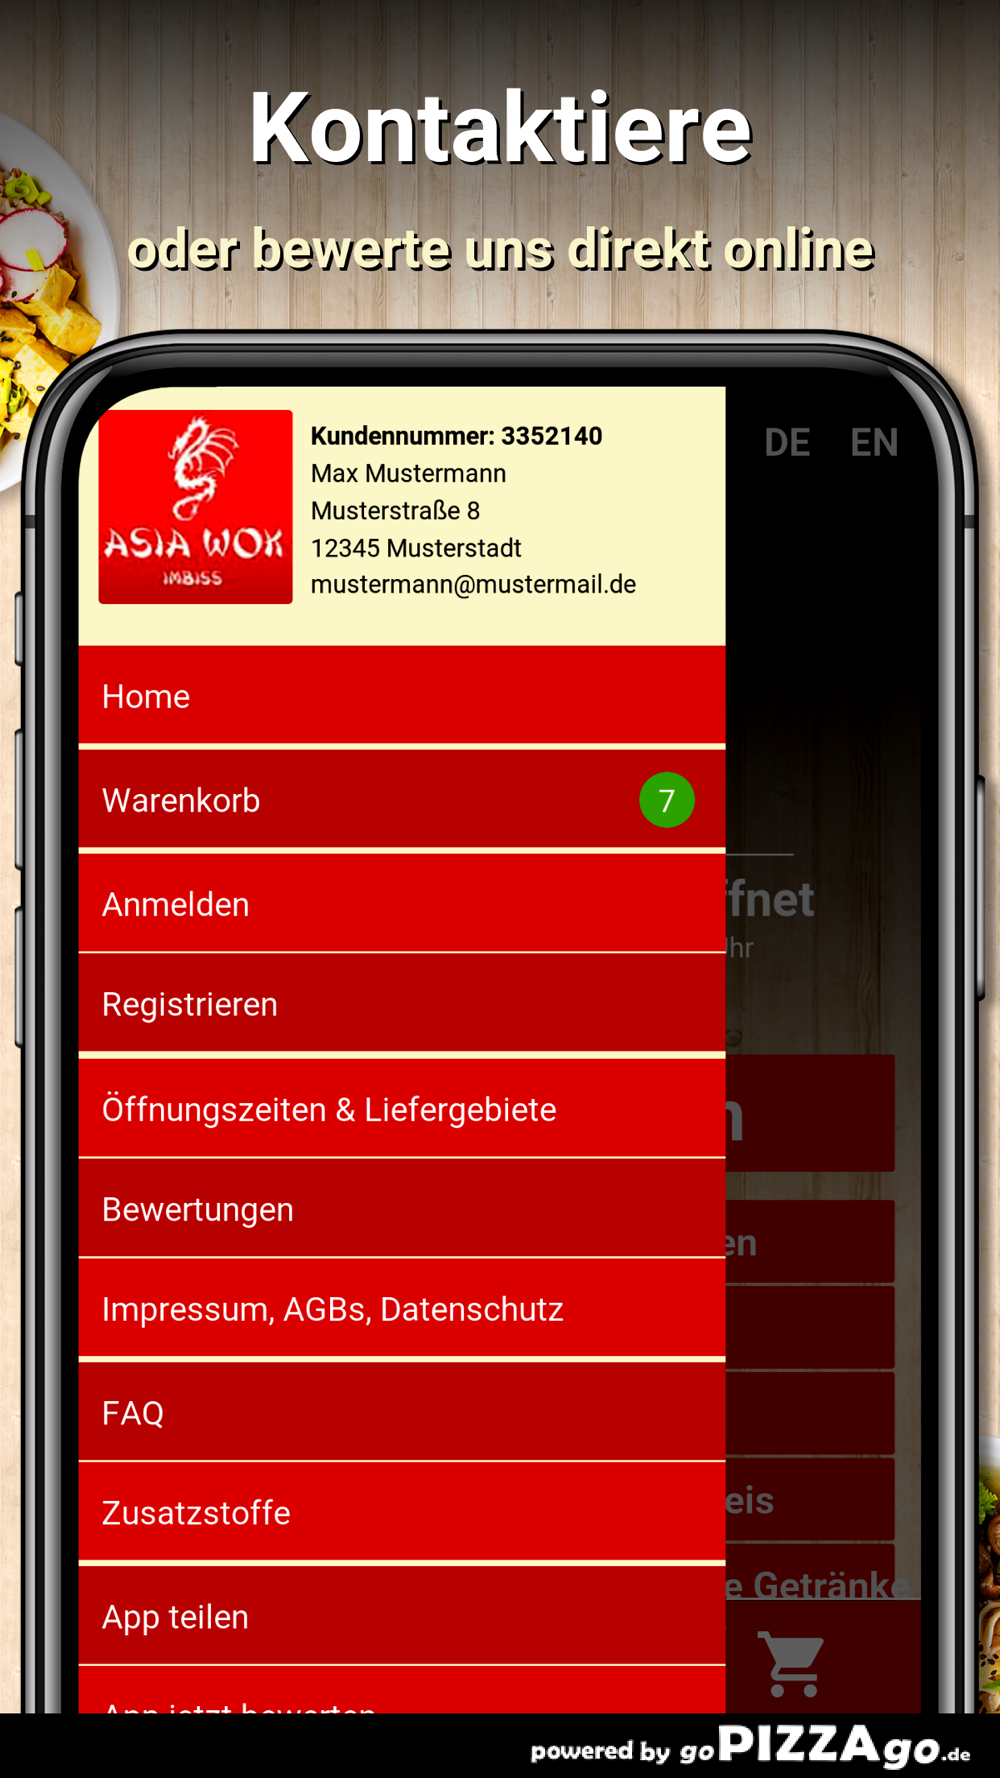 Asia Wok Imbiss Lüneburg Free Download App for iPhone - STEPrimo.com